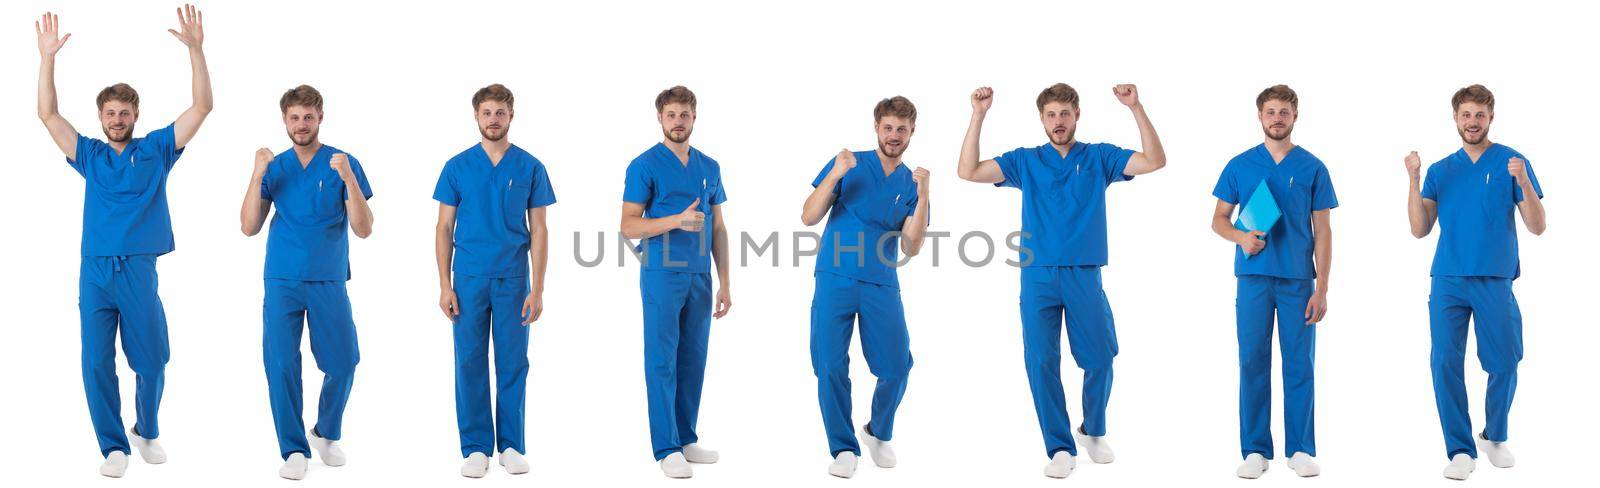 Full length portraits of male nurse by ALotOfPeople